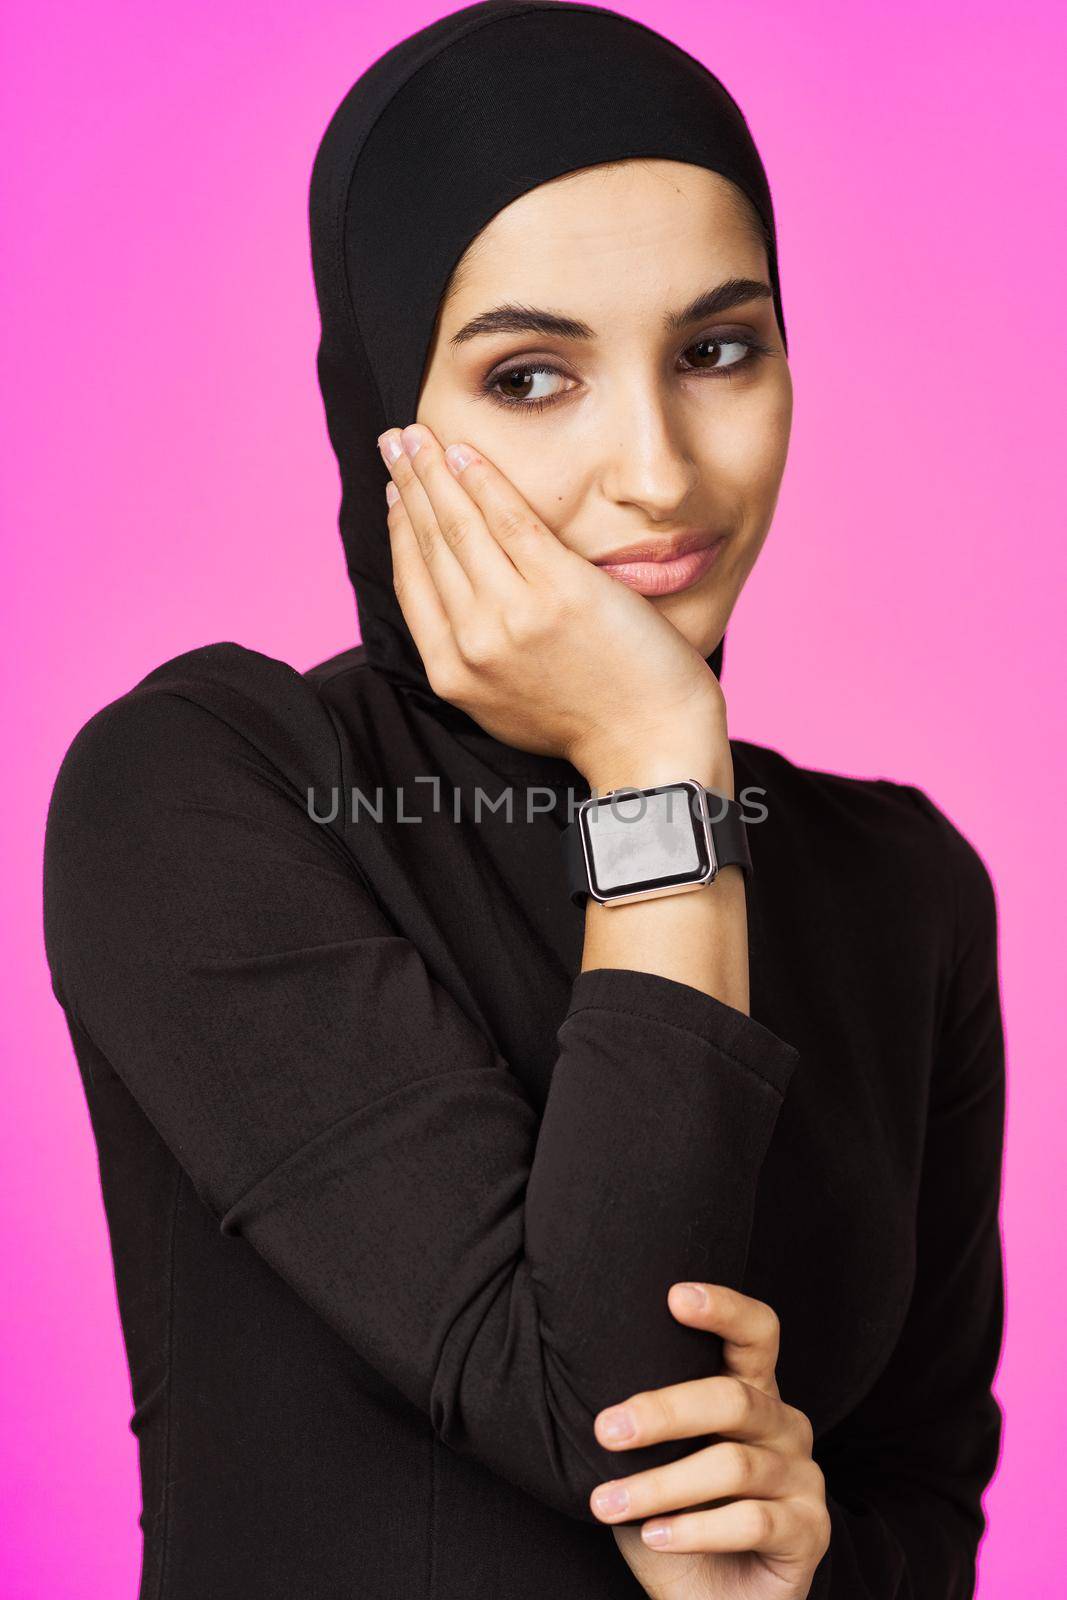 muslim woman in black hijab smart watch technology entertainment. High quality photo